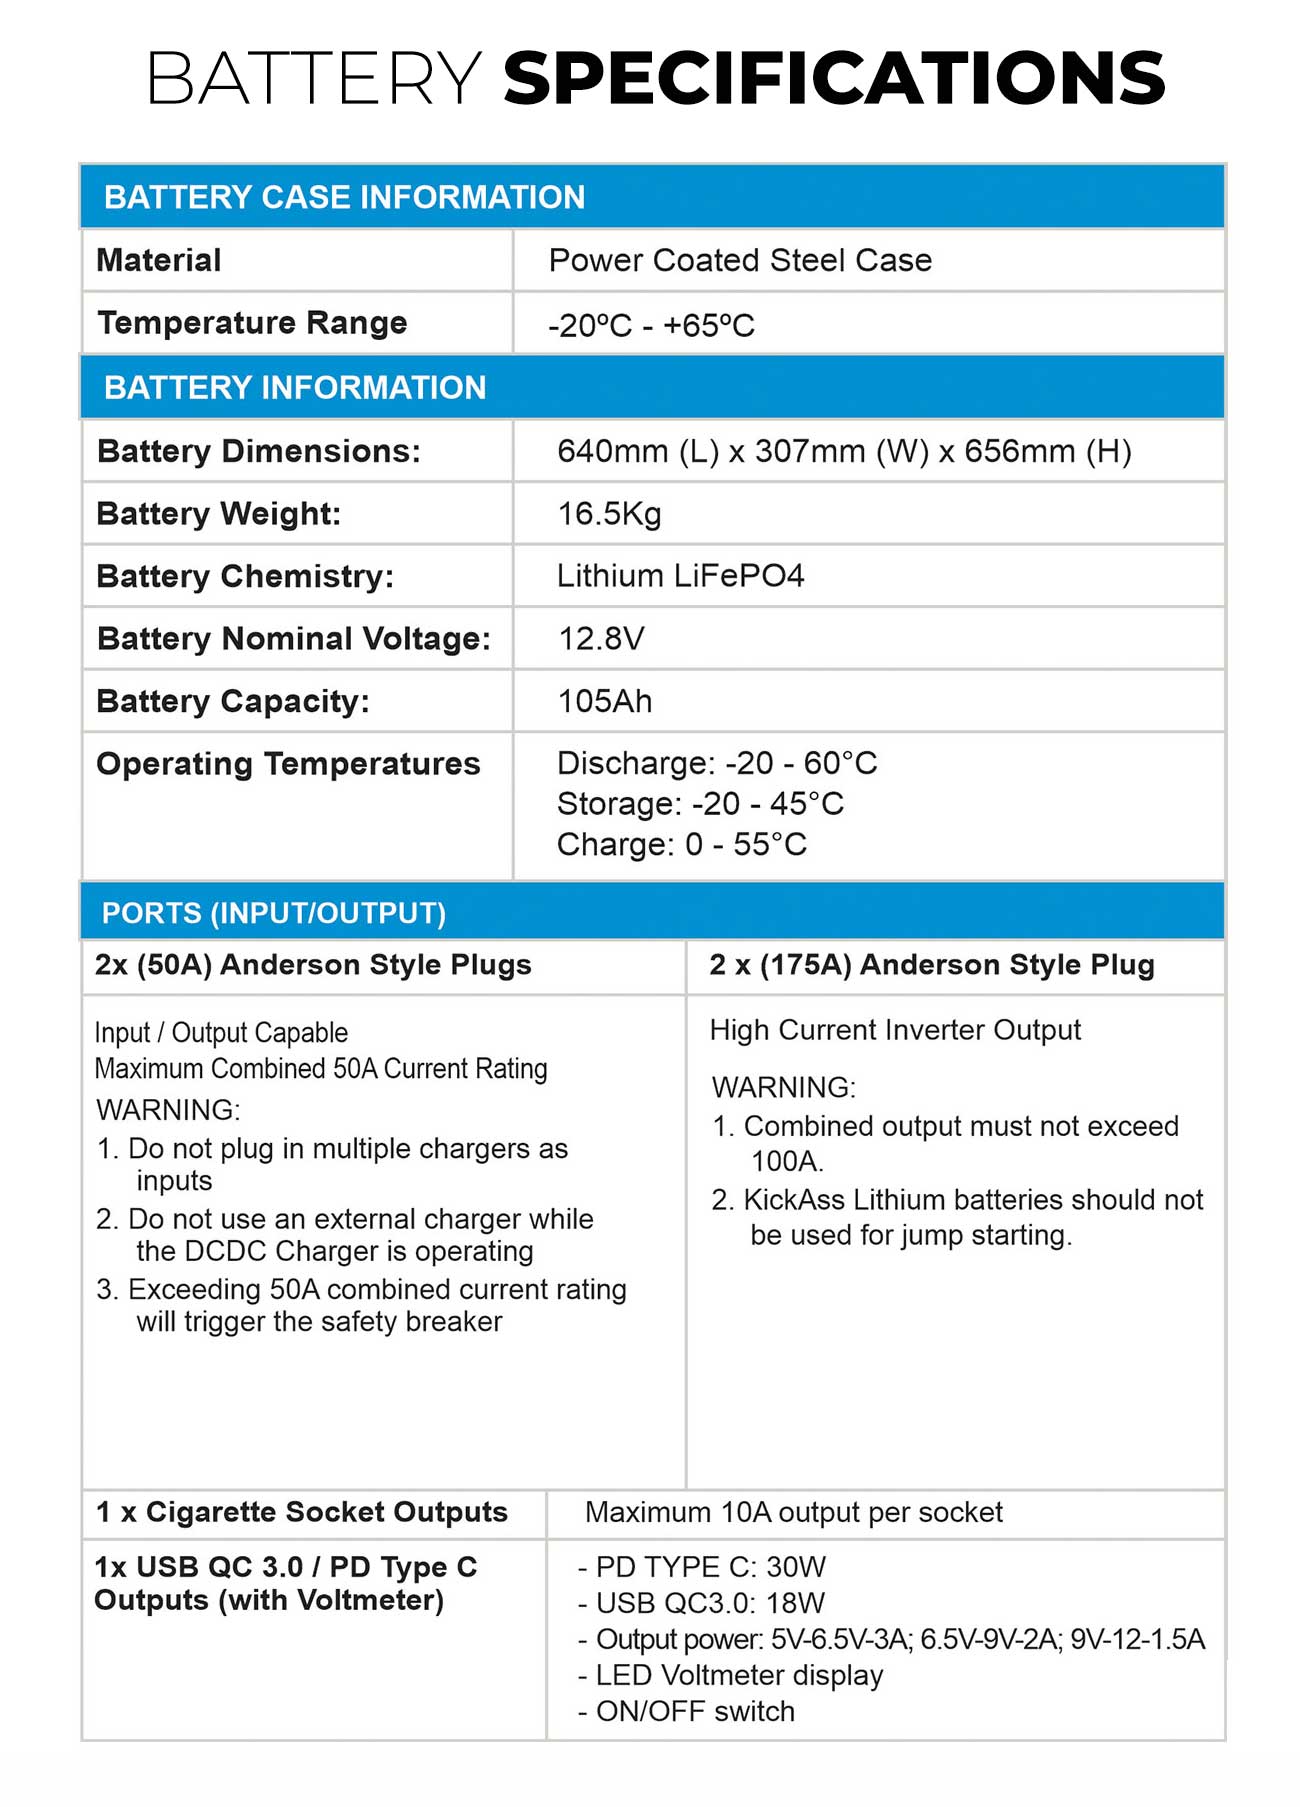 KickAss Ultra Slim 105AH Lithium Battery with Bluetooth Essentials Bundle